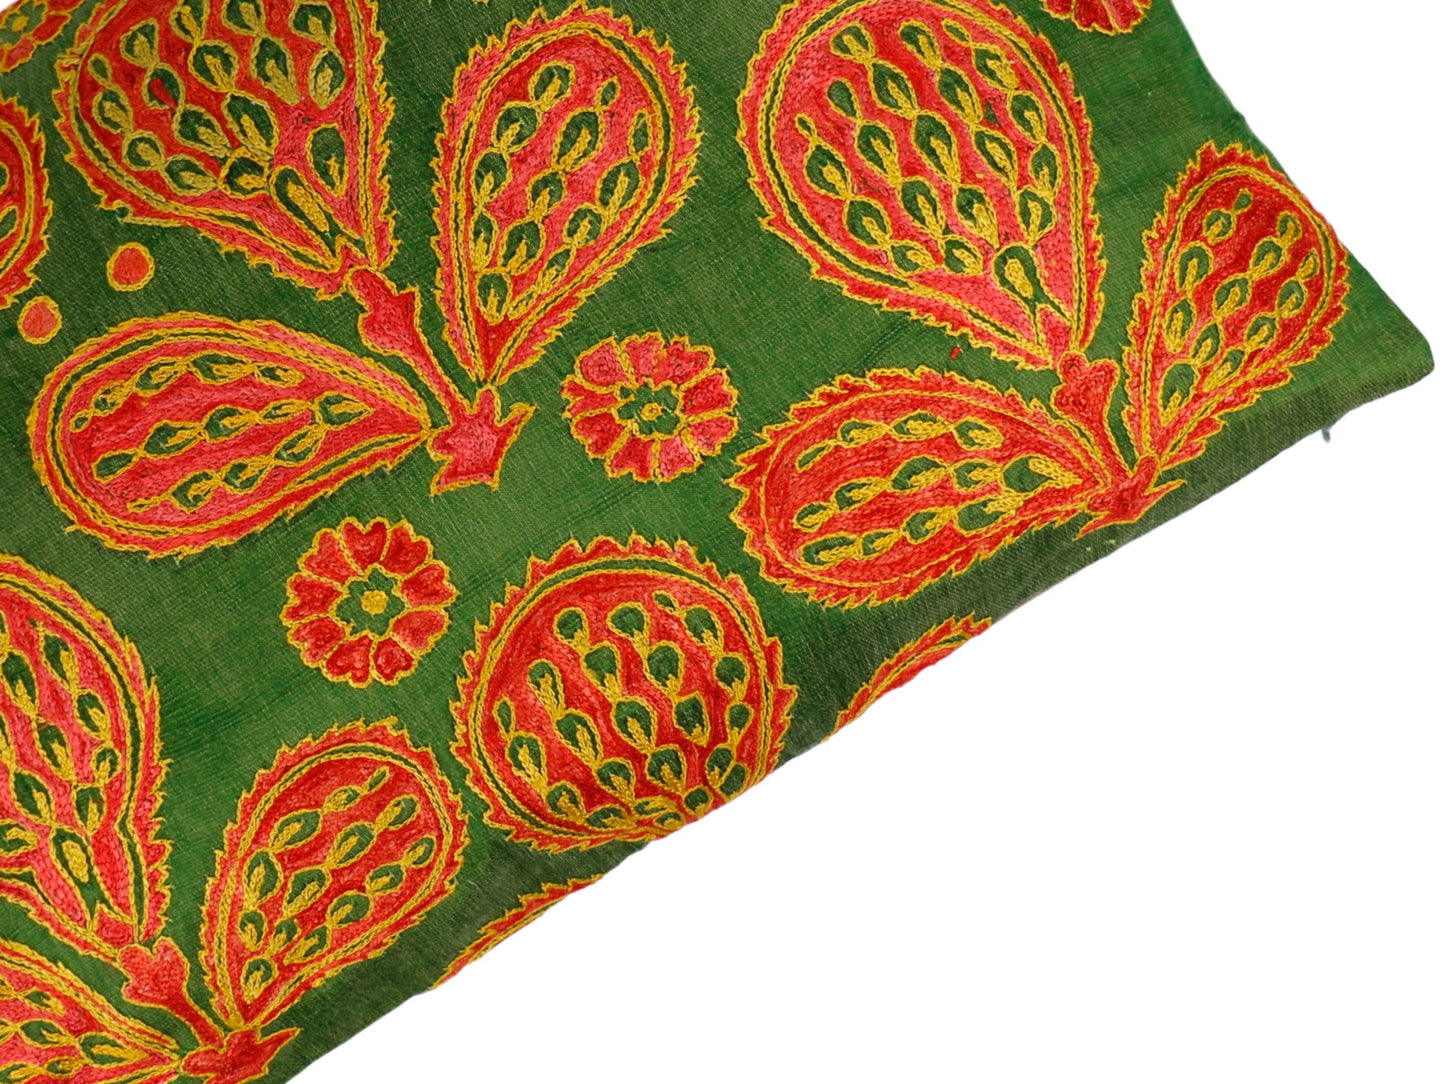 Silk Embroidered Suzani Green and Orange Ottoman Antique Motif Cushion